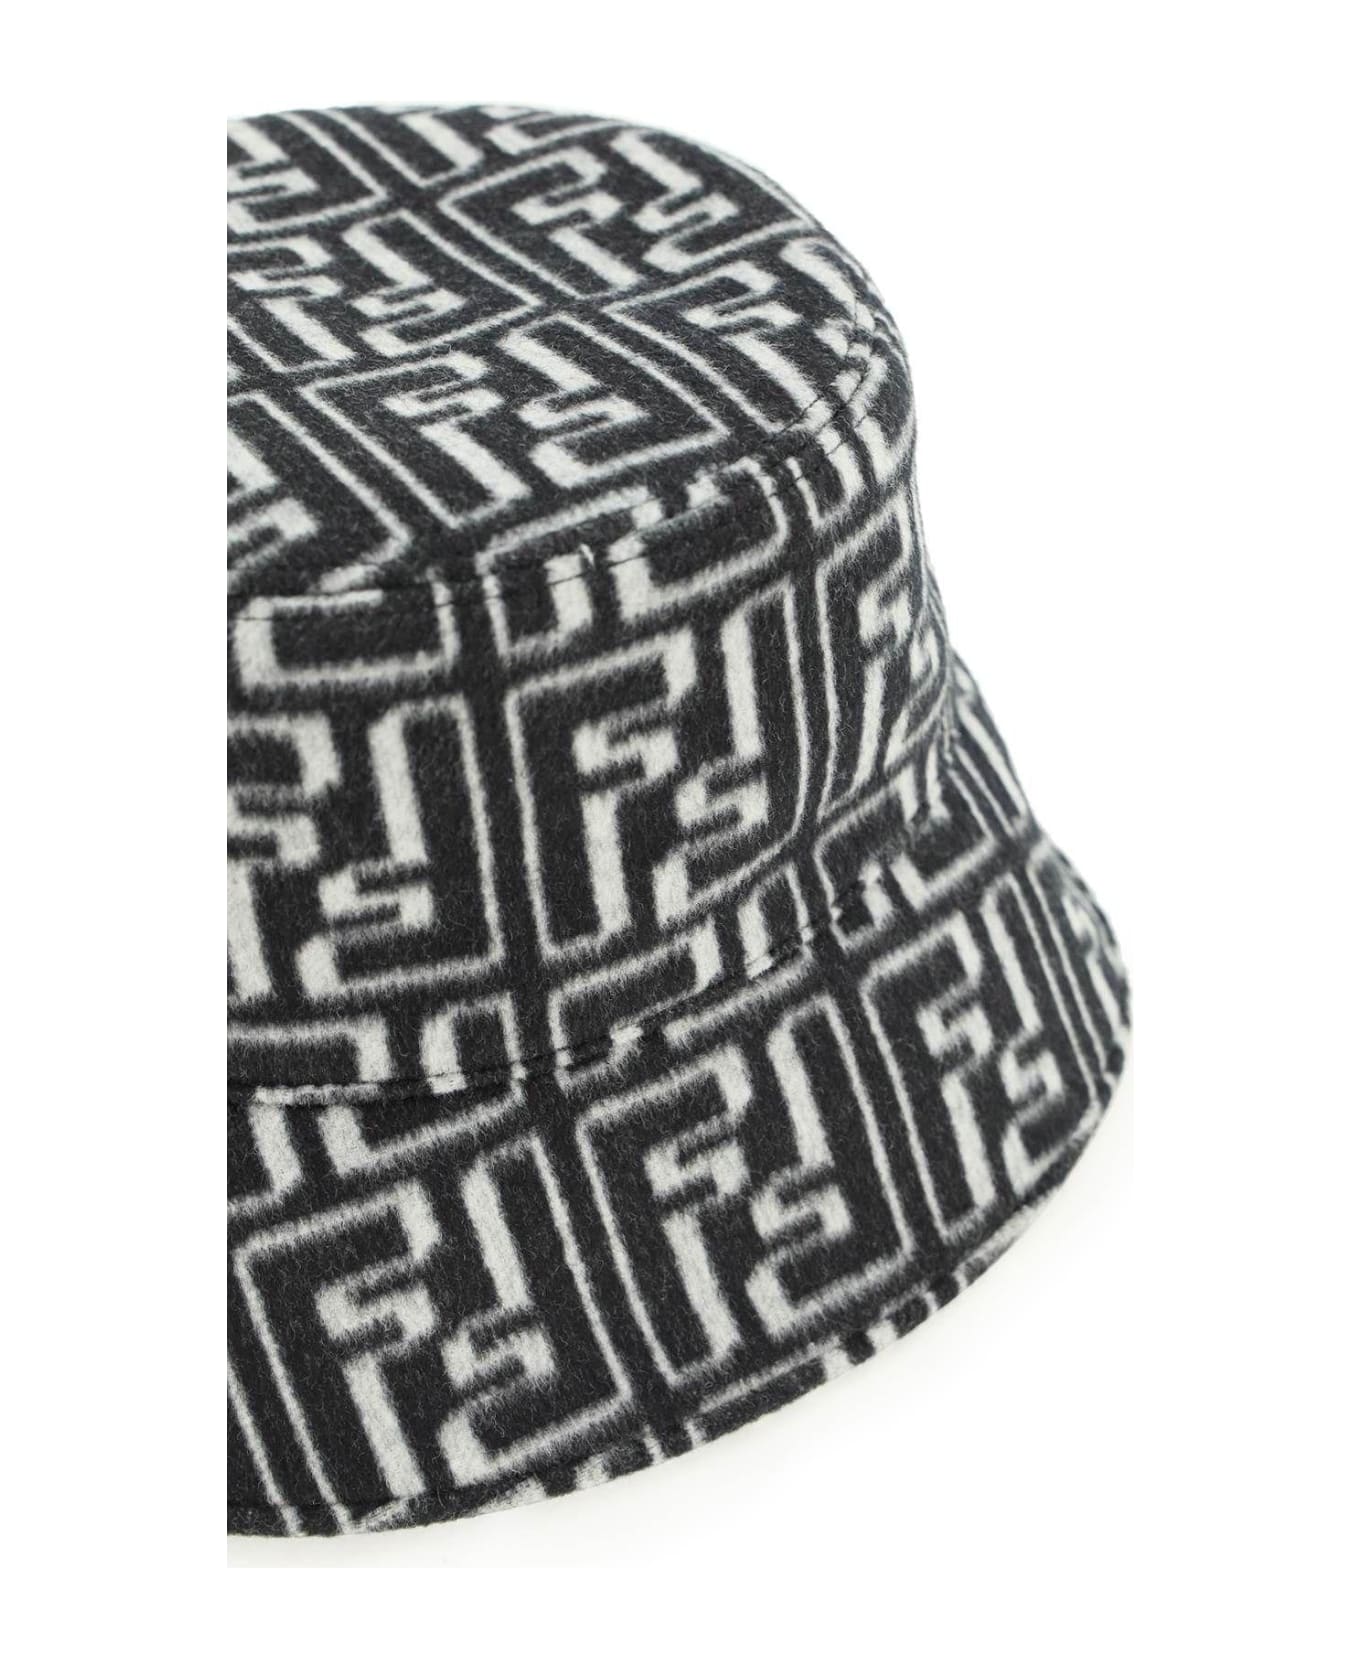 Fendi Jacquard Wool Bucket Hat - Black, white